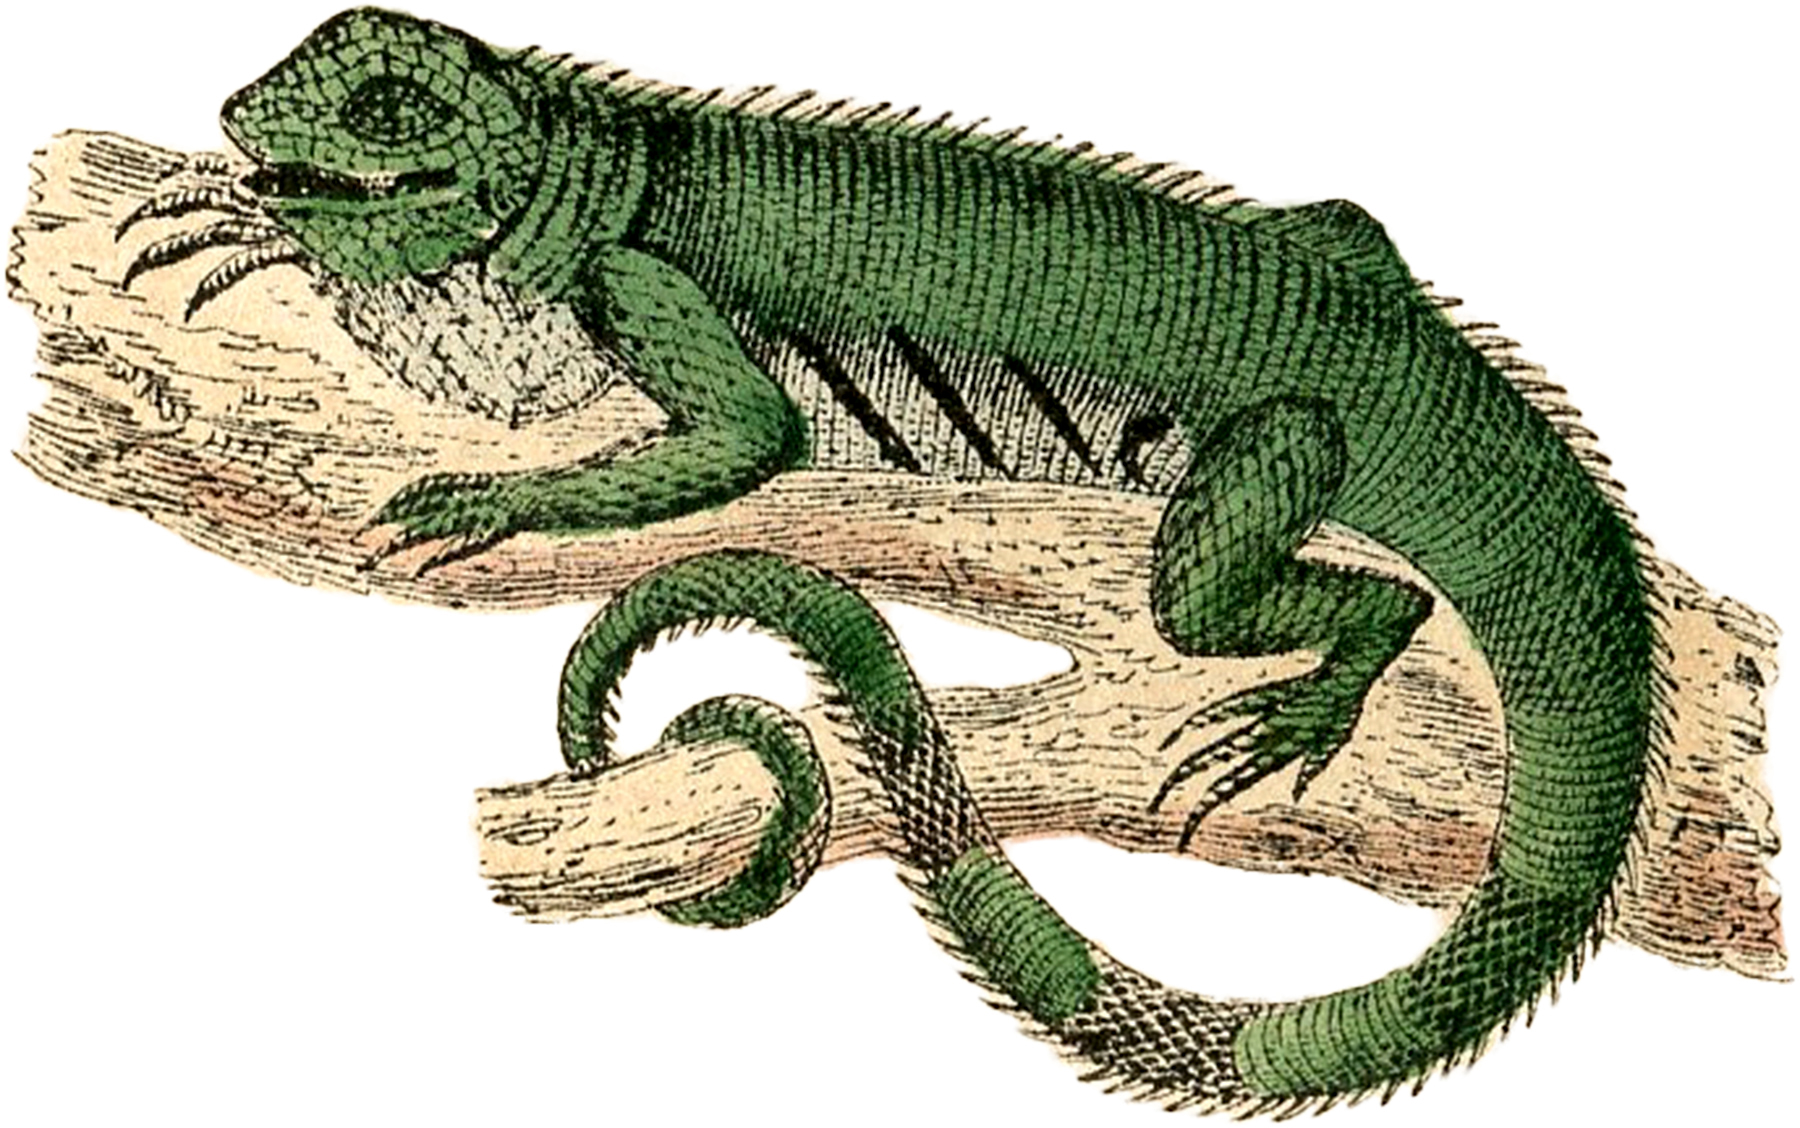 Free Public Domain Lizard Image! - The Graphics Fairy1800 x 1128